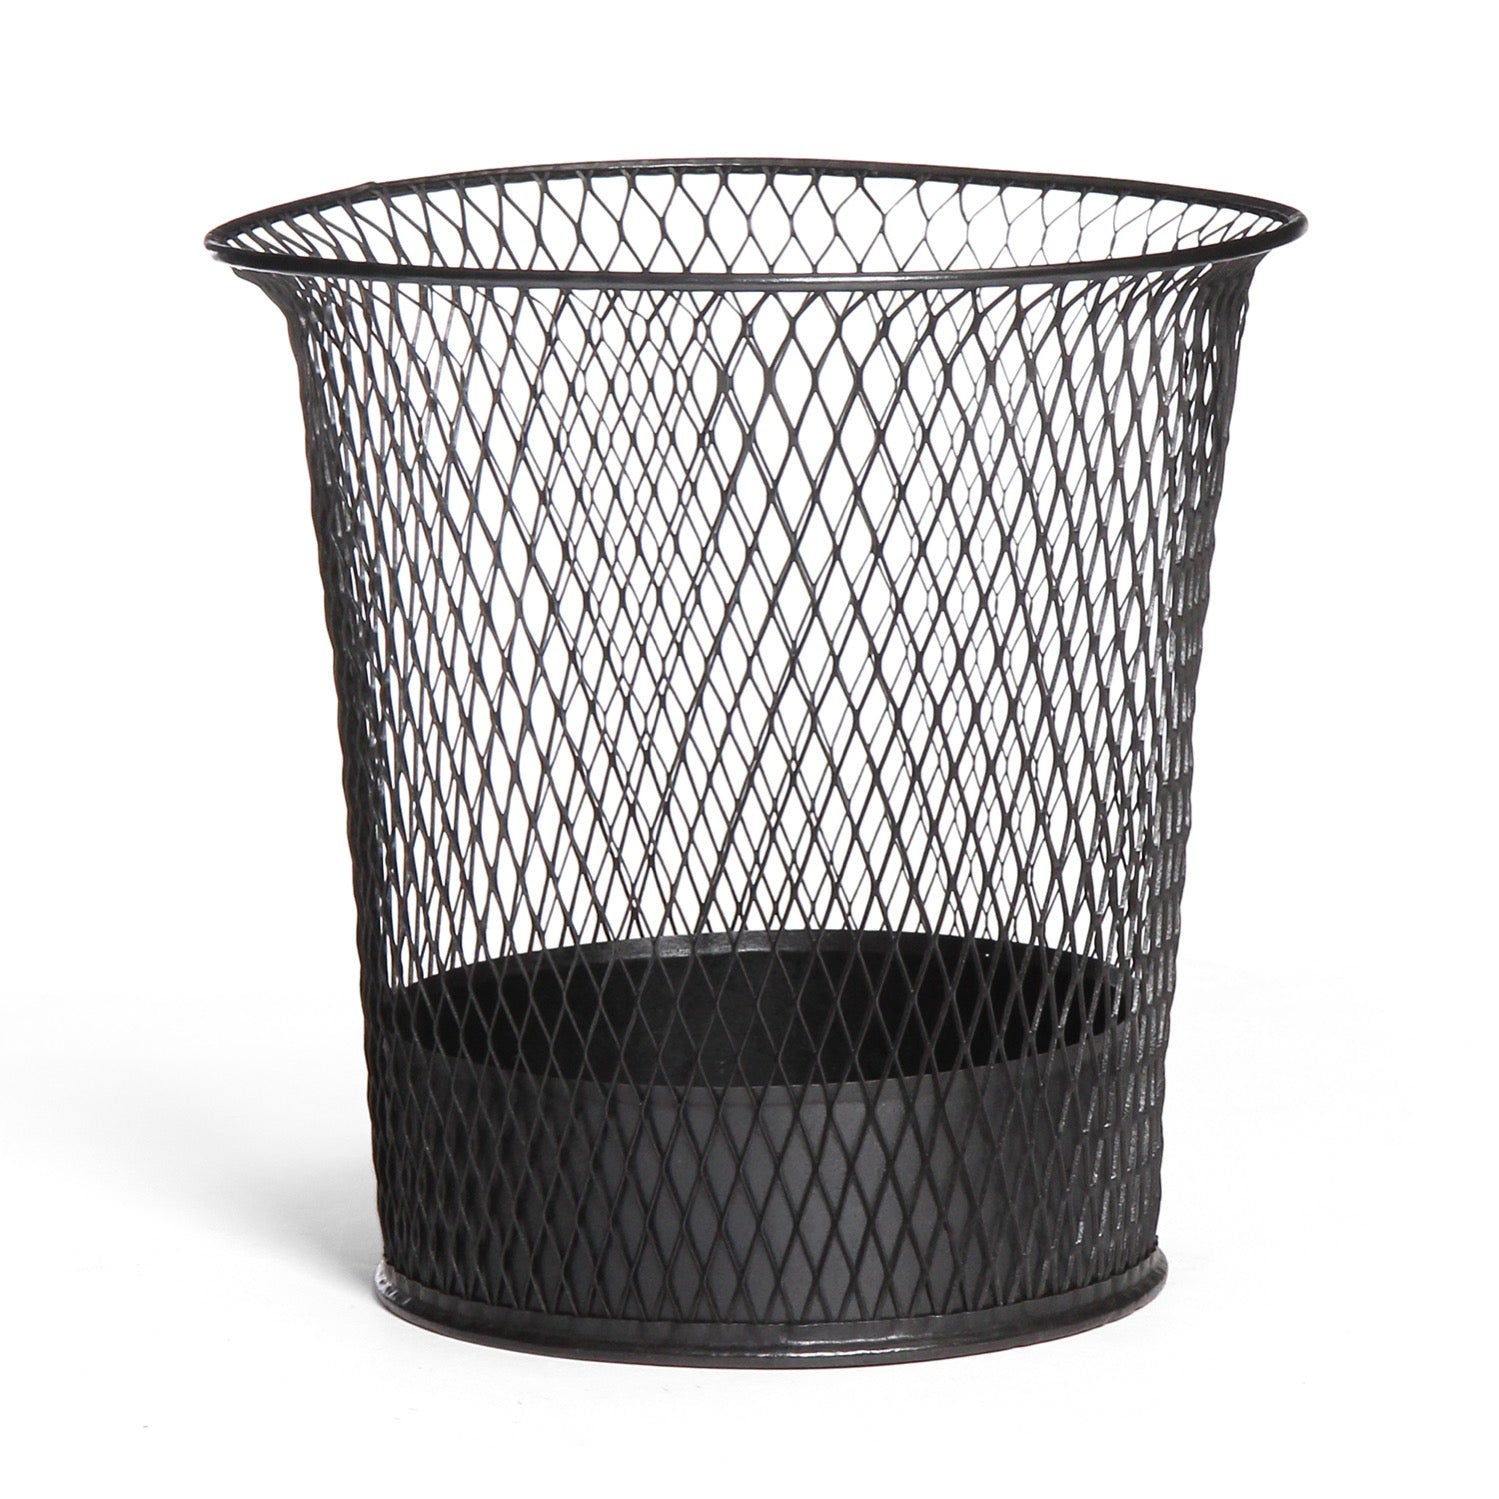 Braided Steel Waste Basket for Nemco